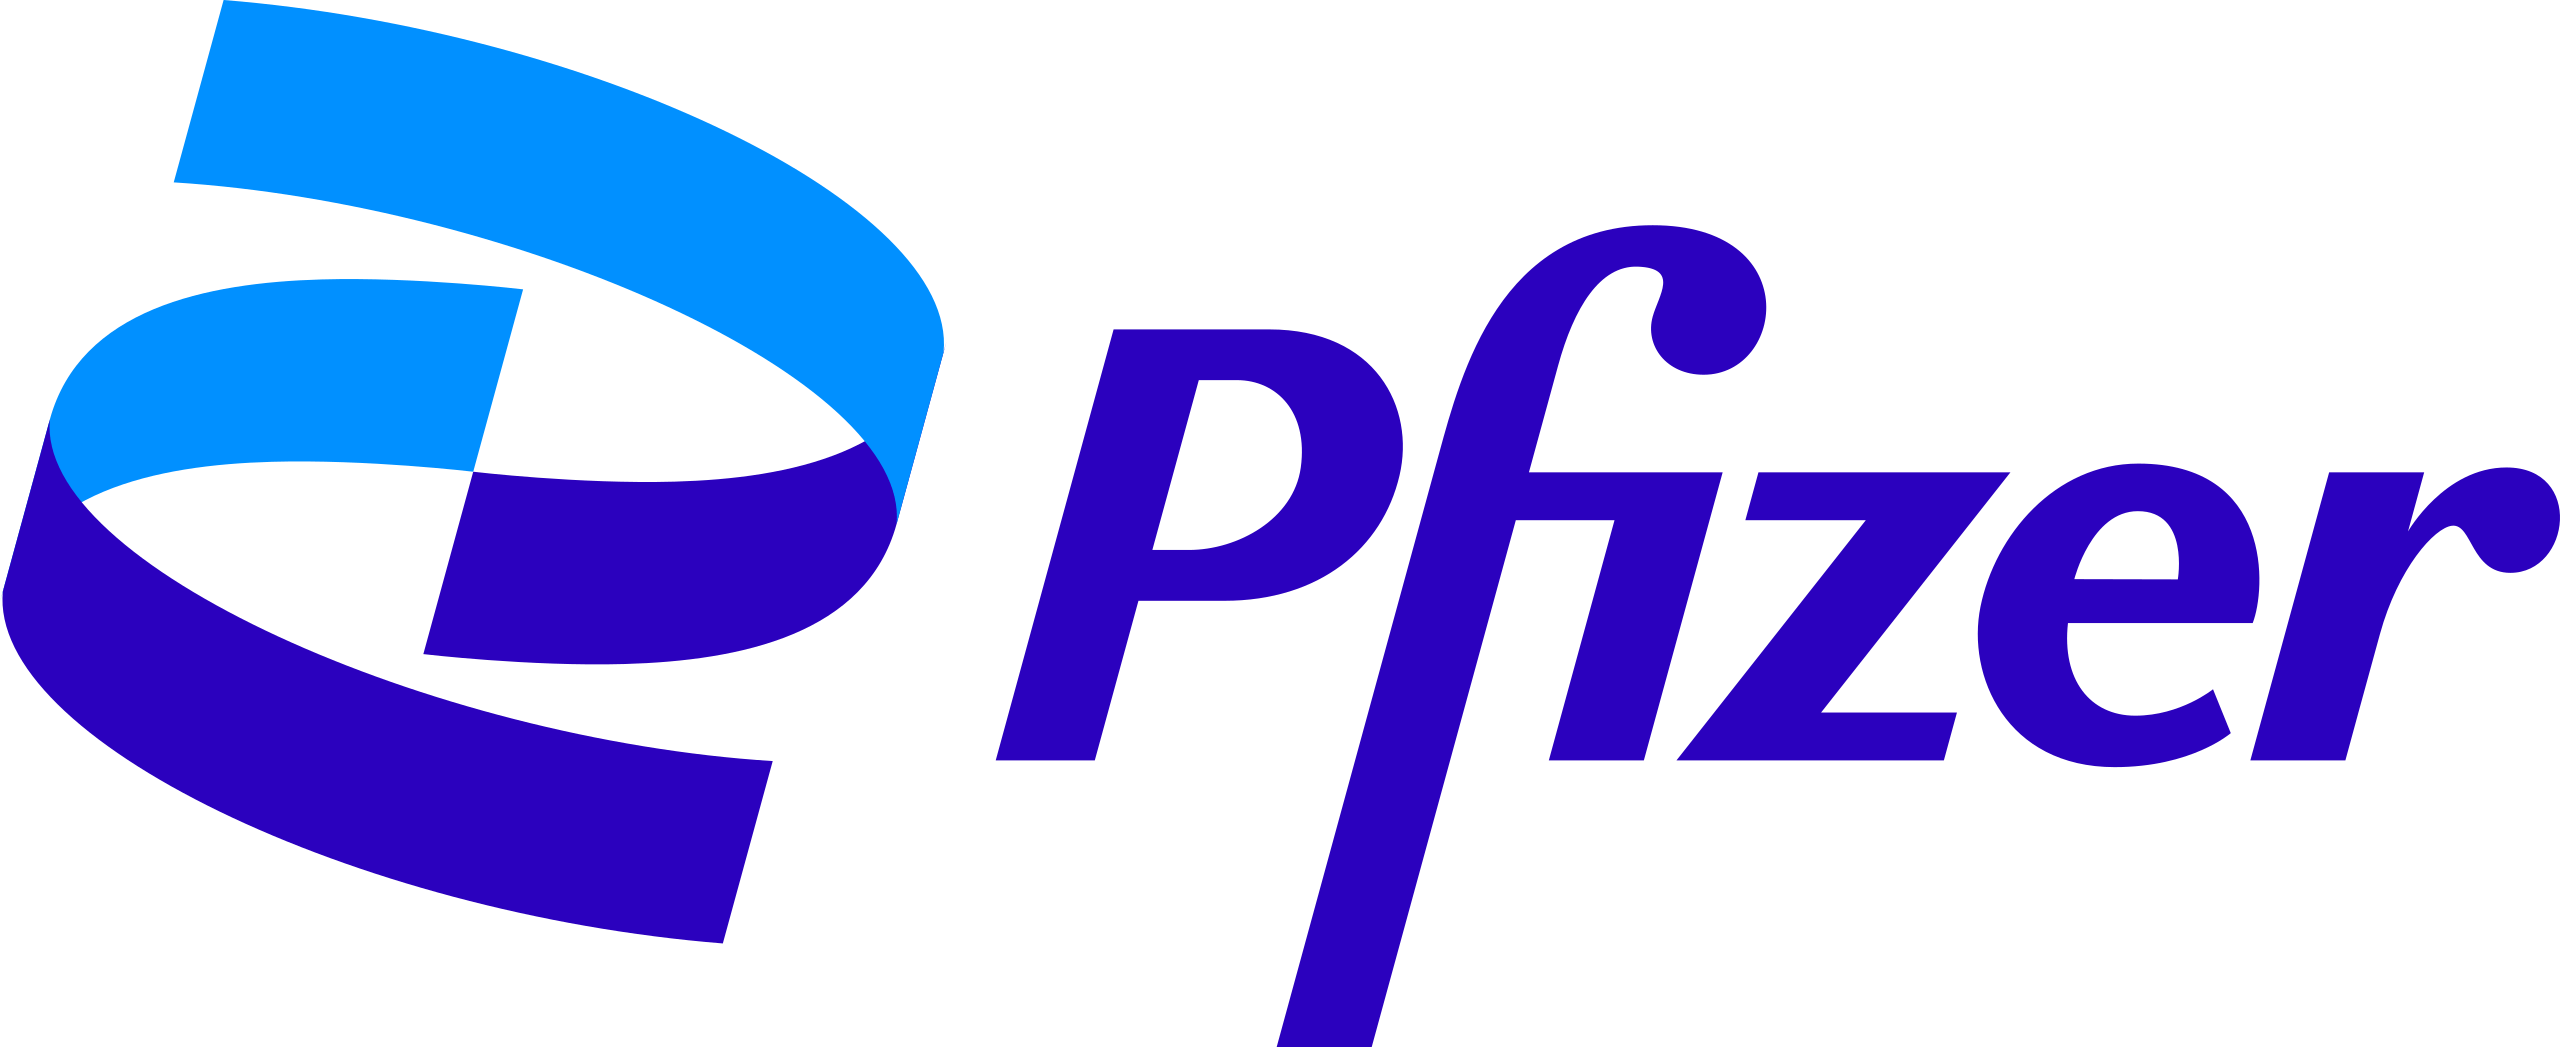 Pfizer_(2021).svg